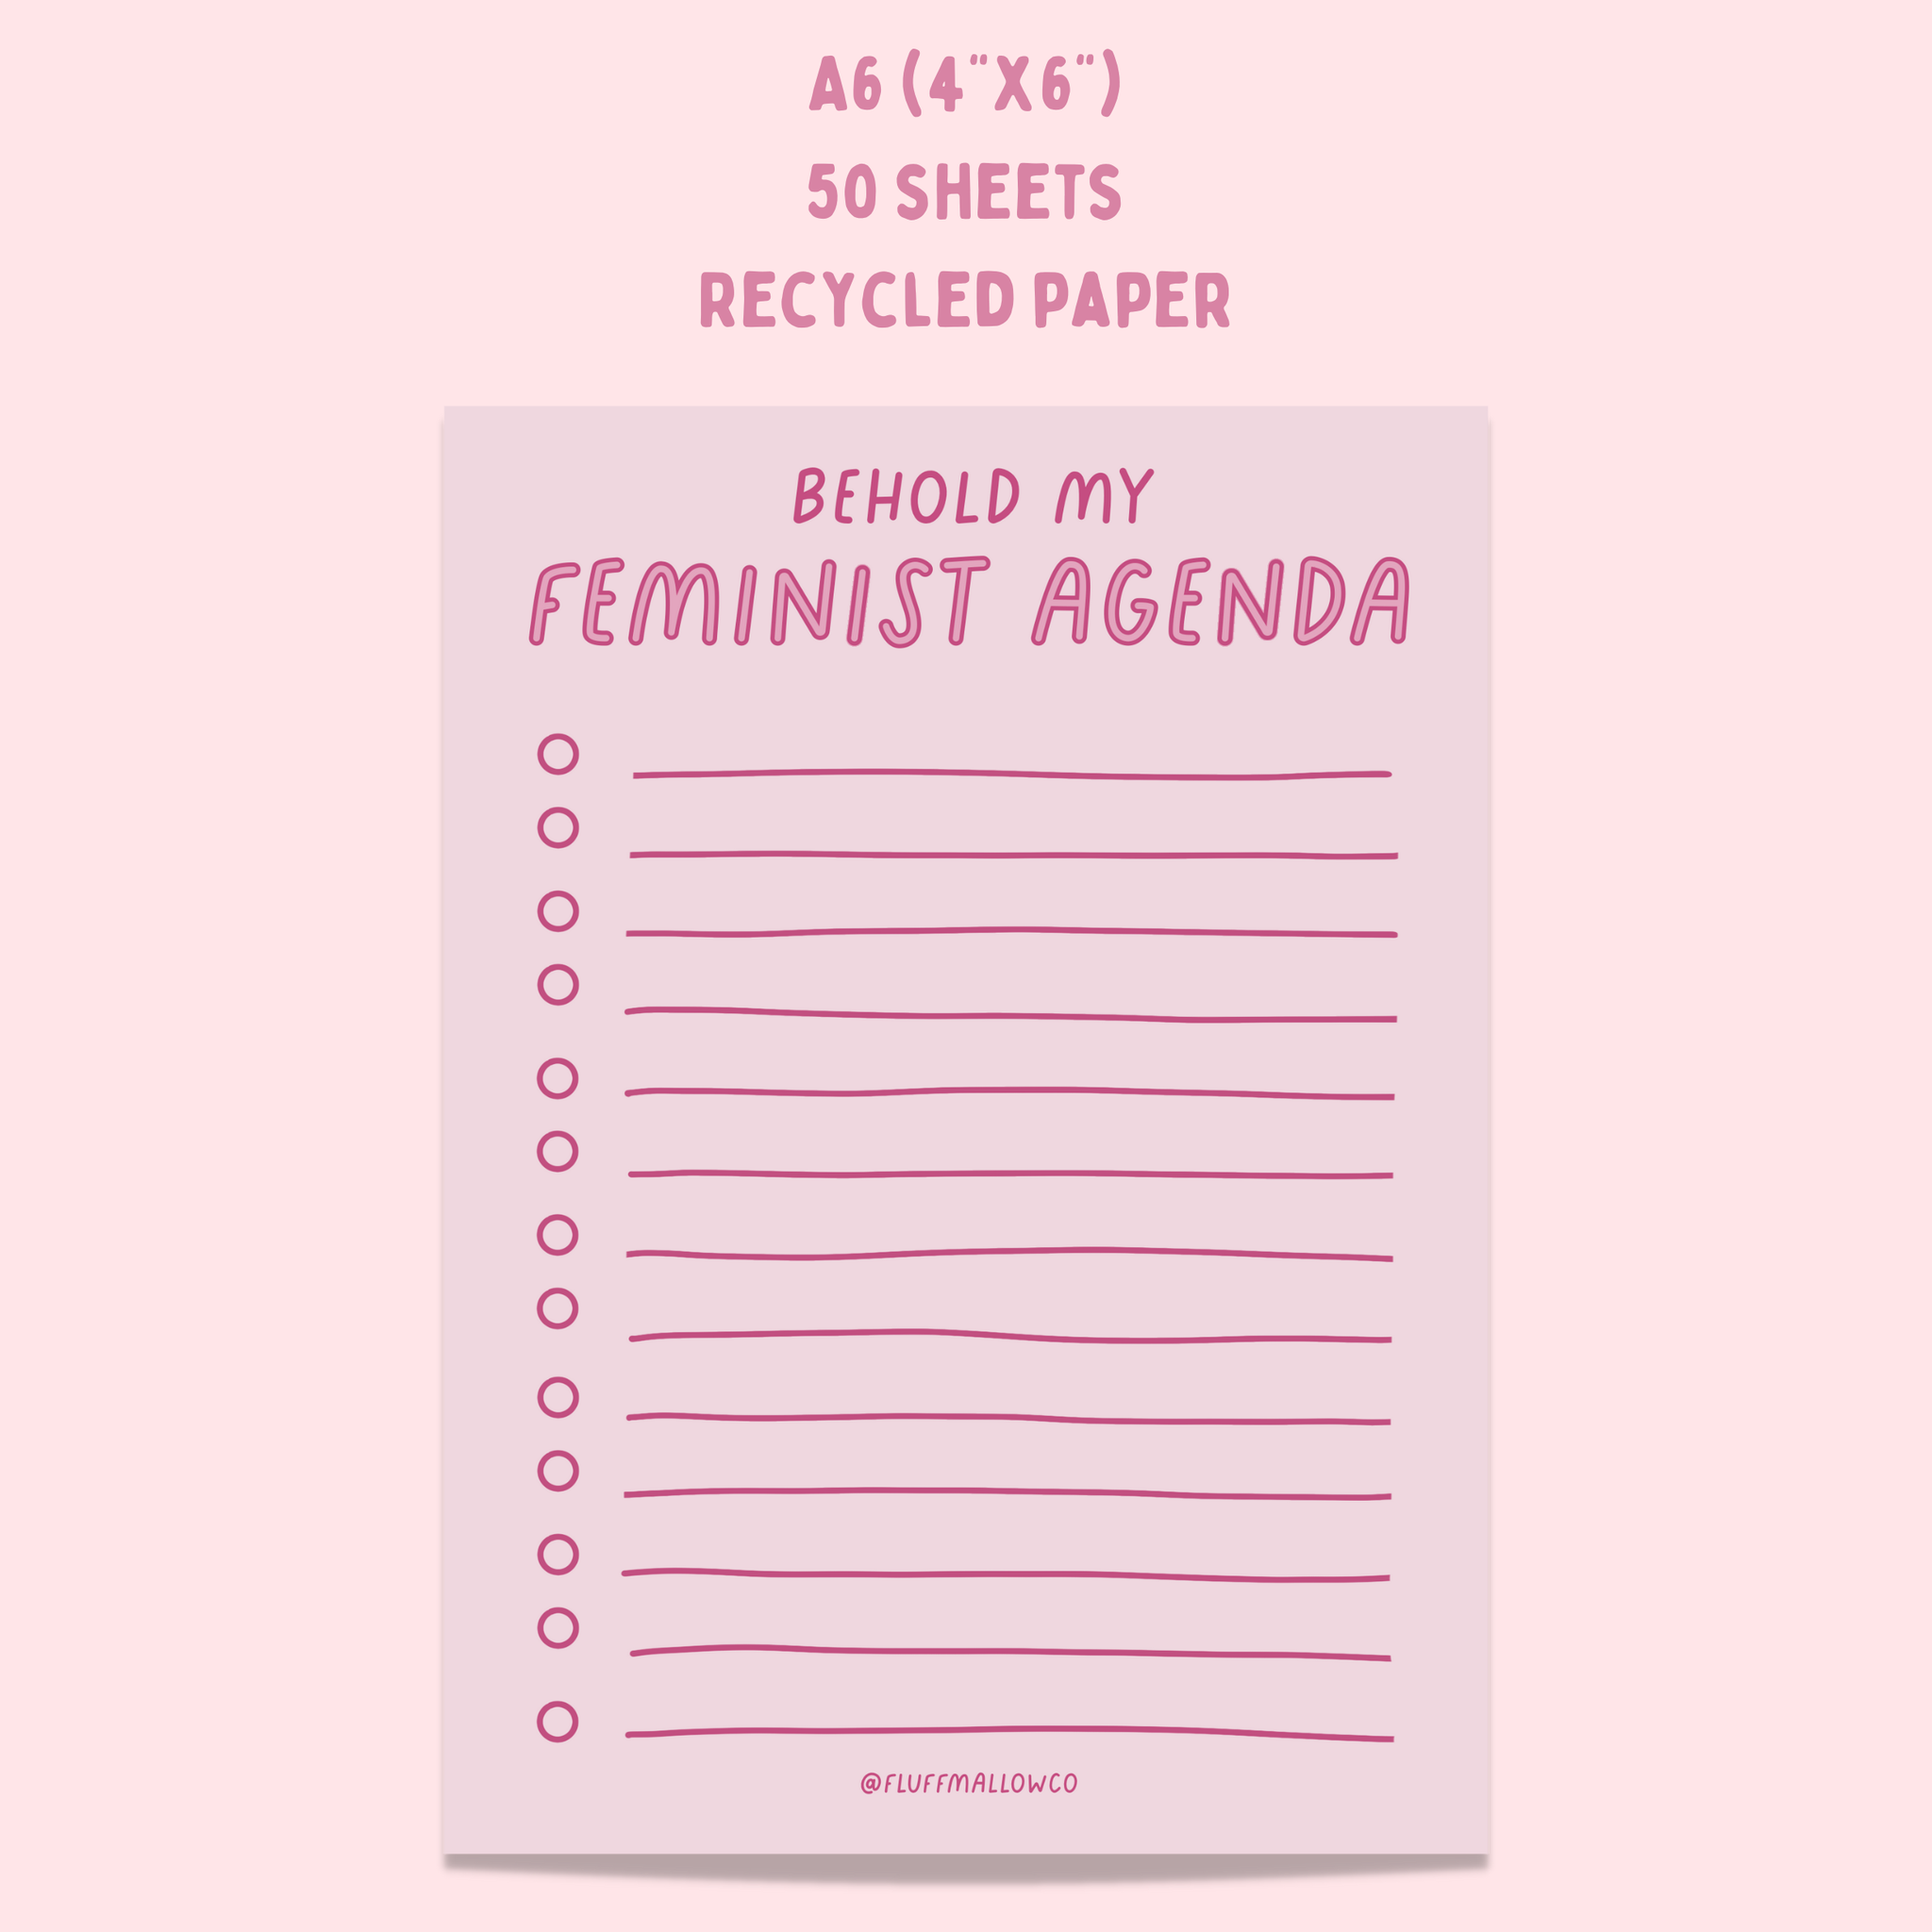 Feminist agenda notepad (4"x6")